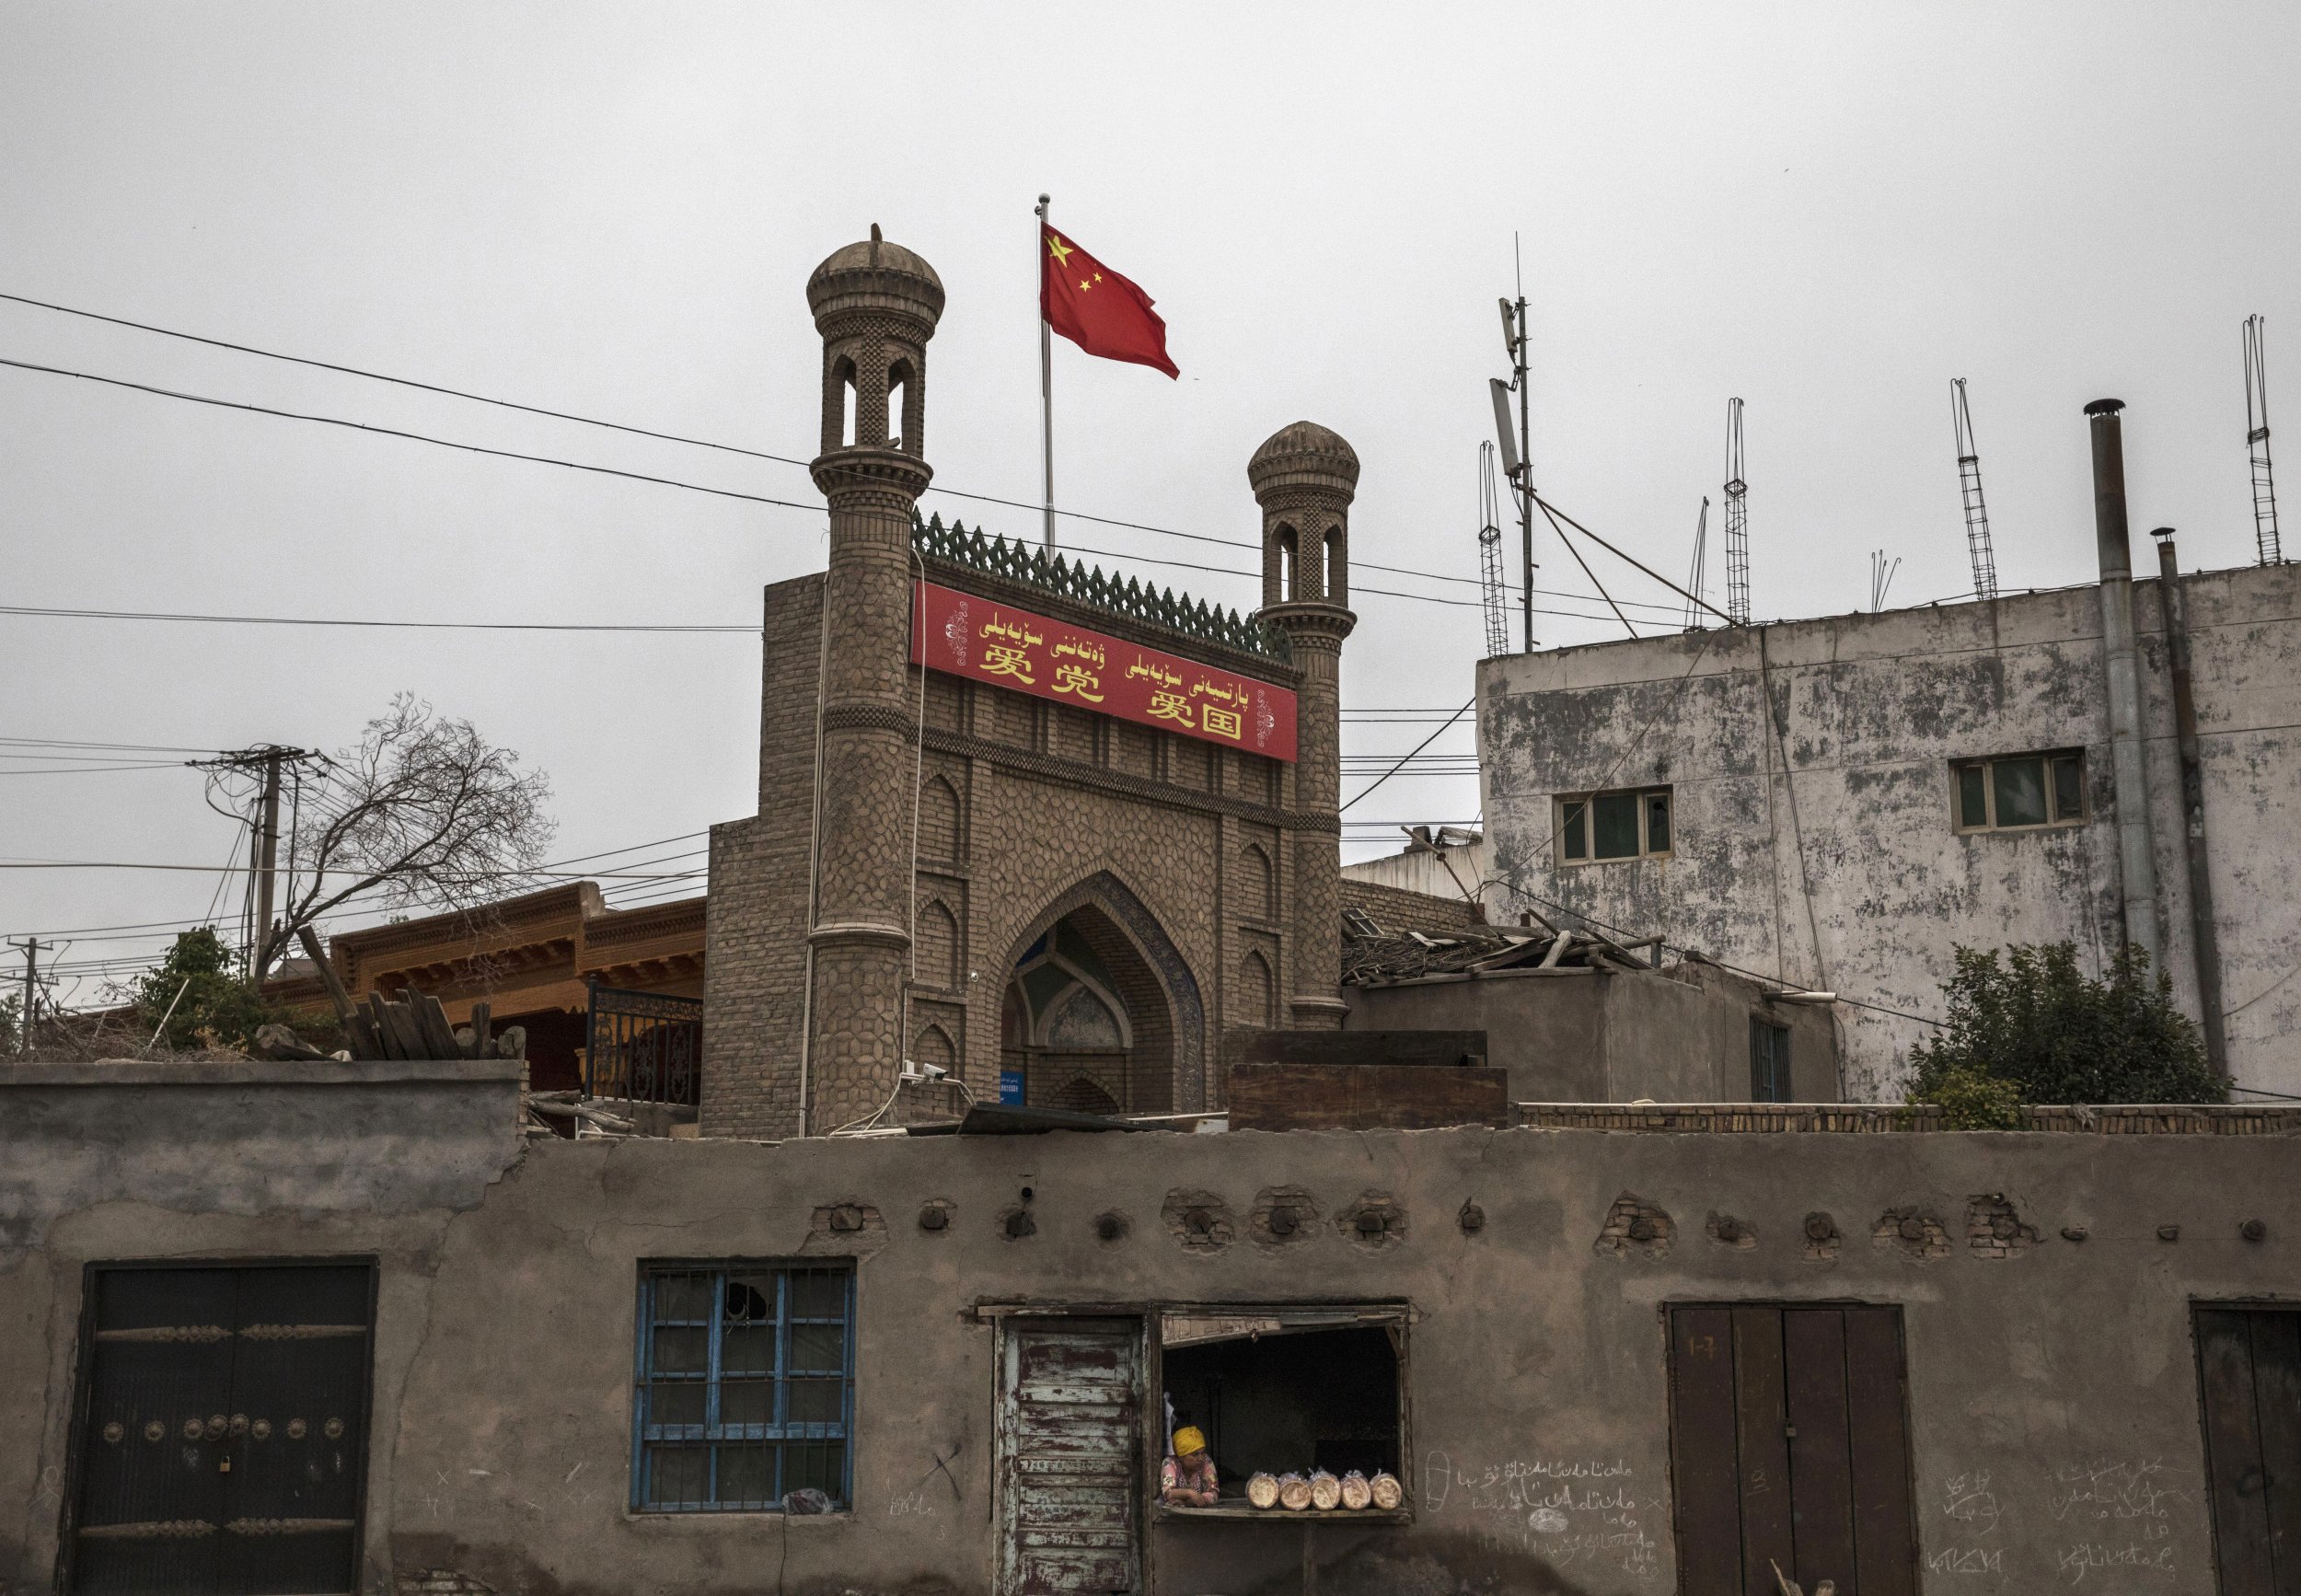 Xinjiang province, China